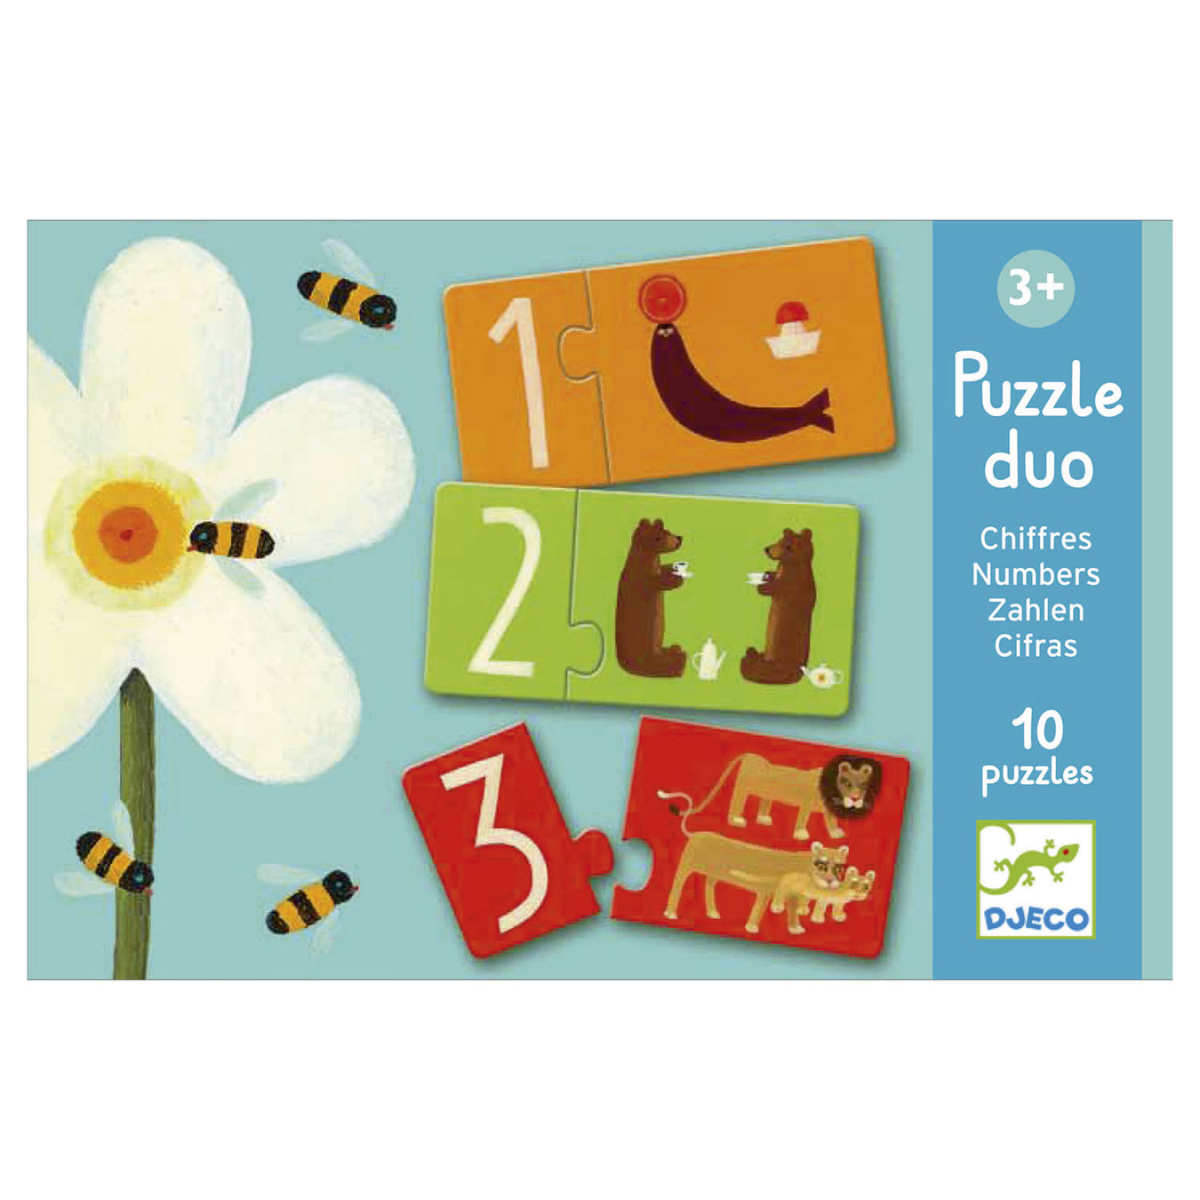 Djeco – Puzzle duo chiffres